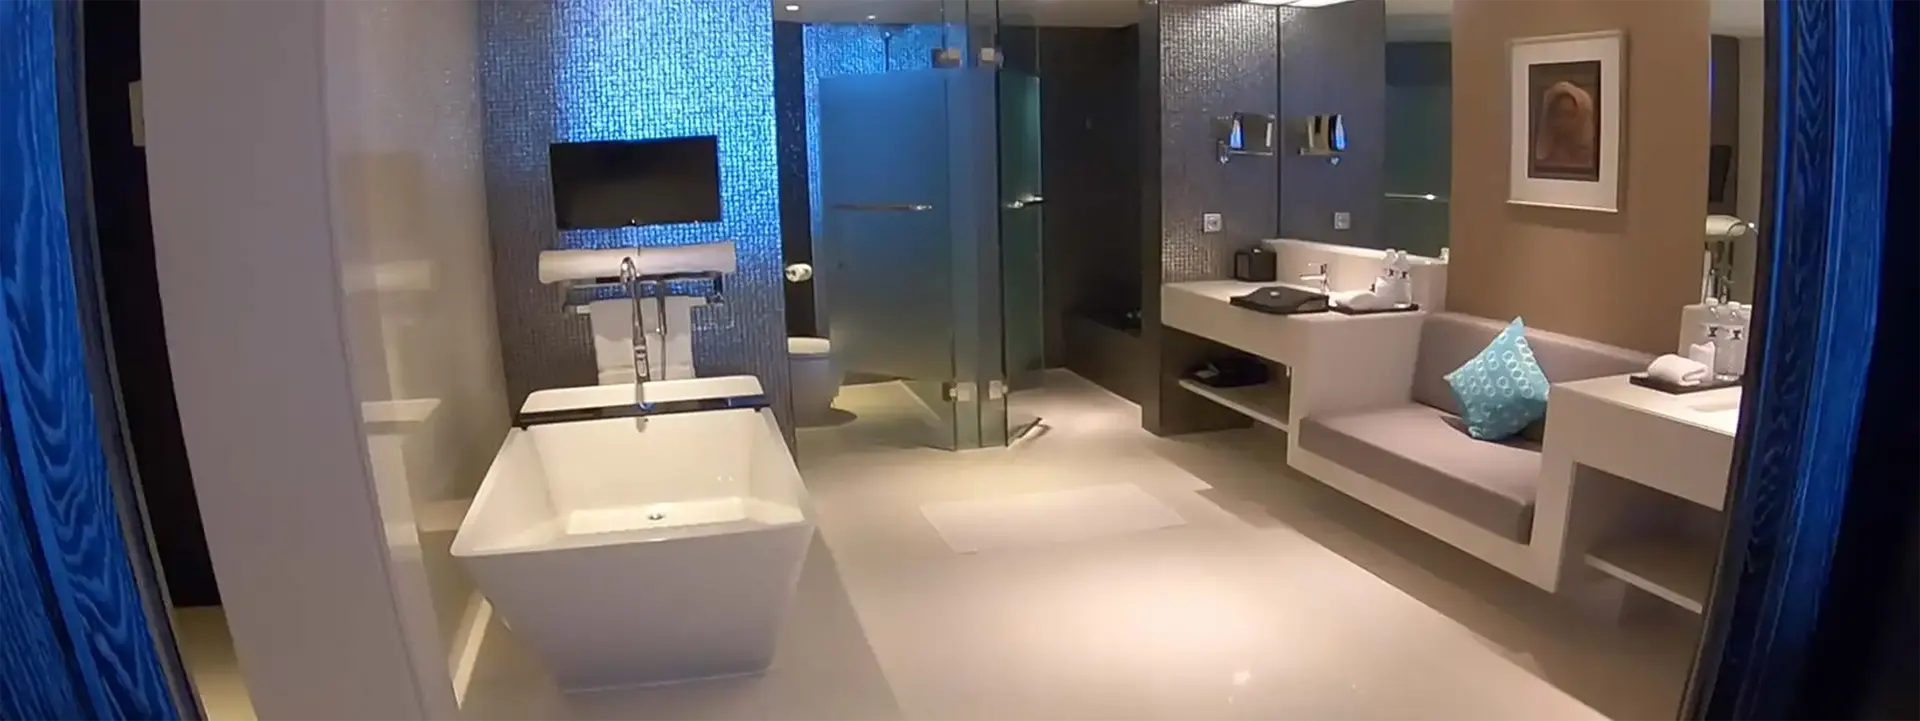 DOUBLE-SIX-LUXURY-HOTEL-SEMINYAK-BALI-holiday-deal-slider-bathroom